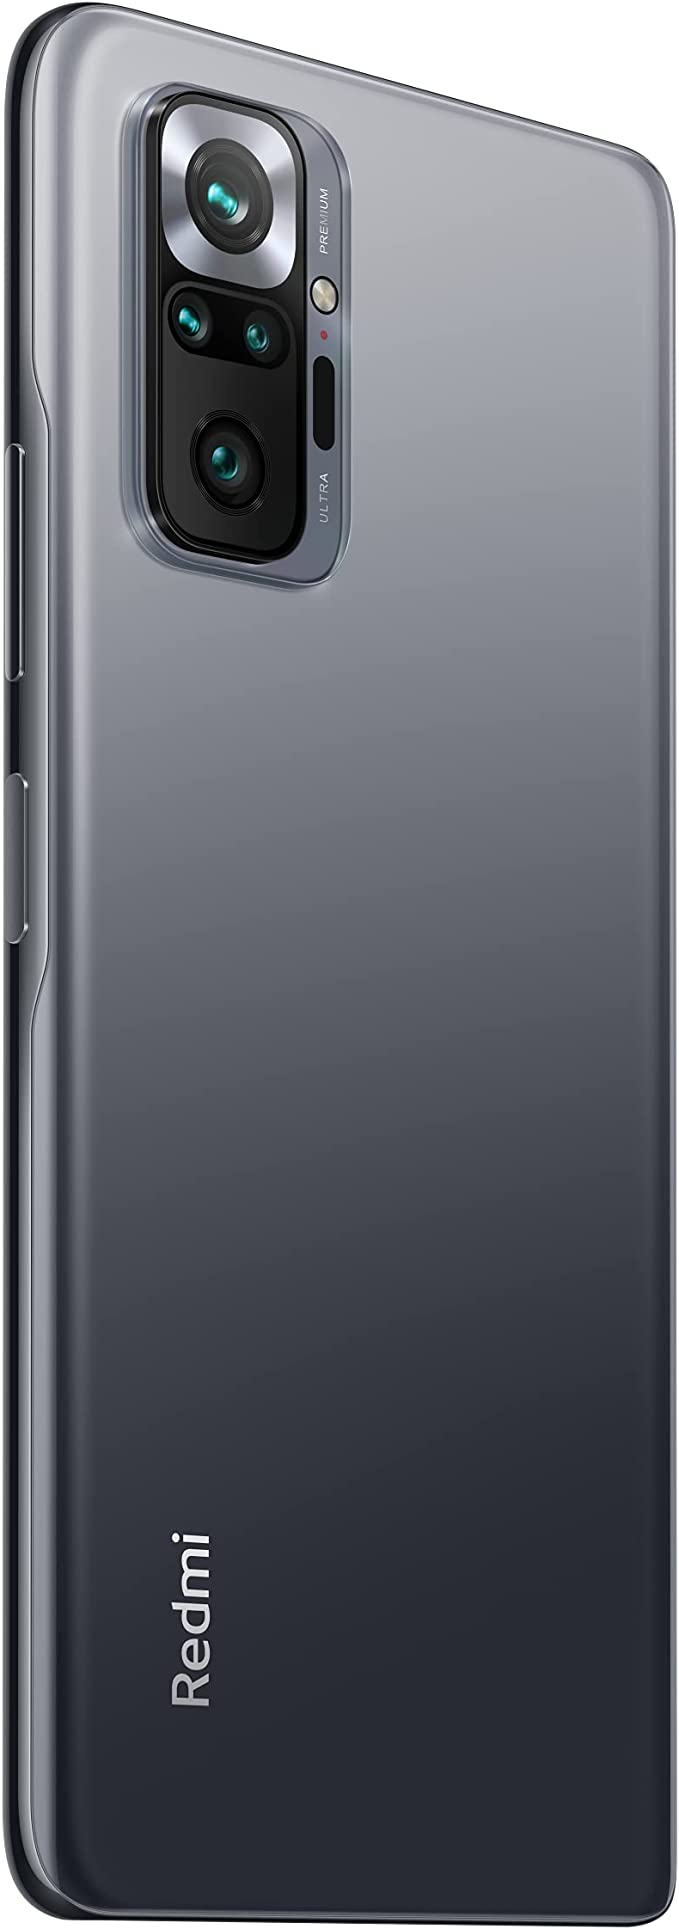 Xiaomi Redmi Note 10 Pro - Smartphone 6+64GB, 6,67” 120Hz AMOLED DotDisplay, Snapdragon 732G, 108MP Quad Camera, 5020mAh, Onyx Gray